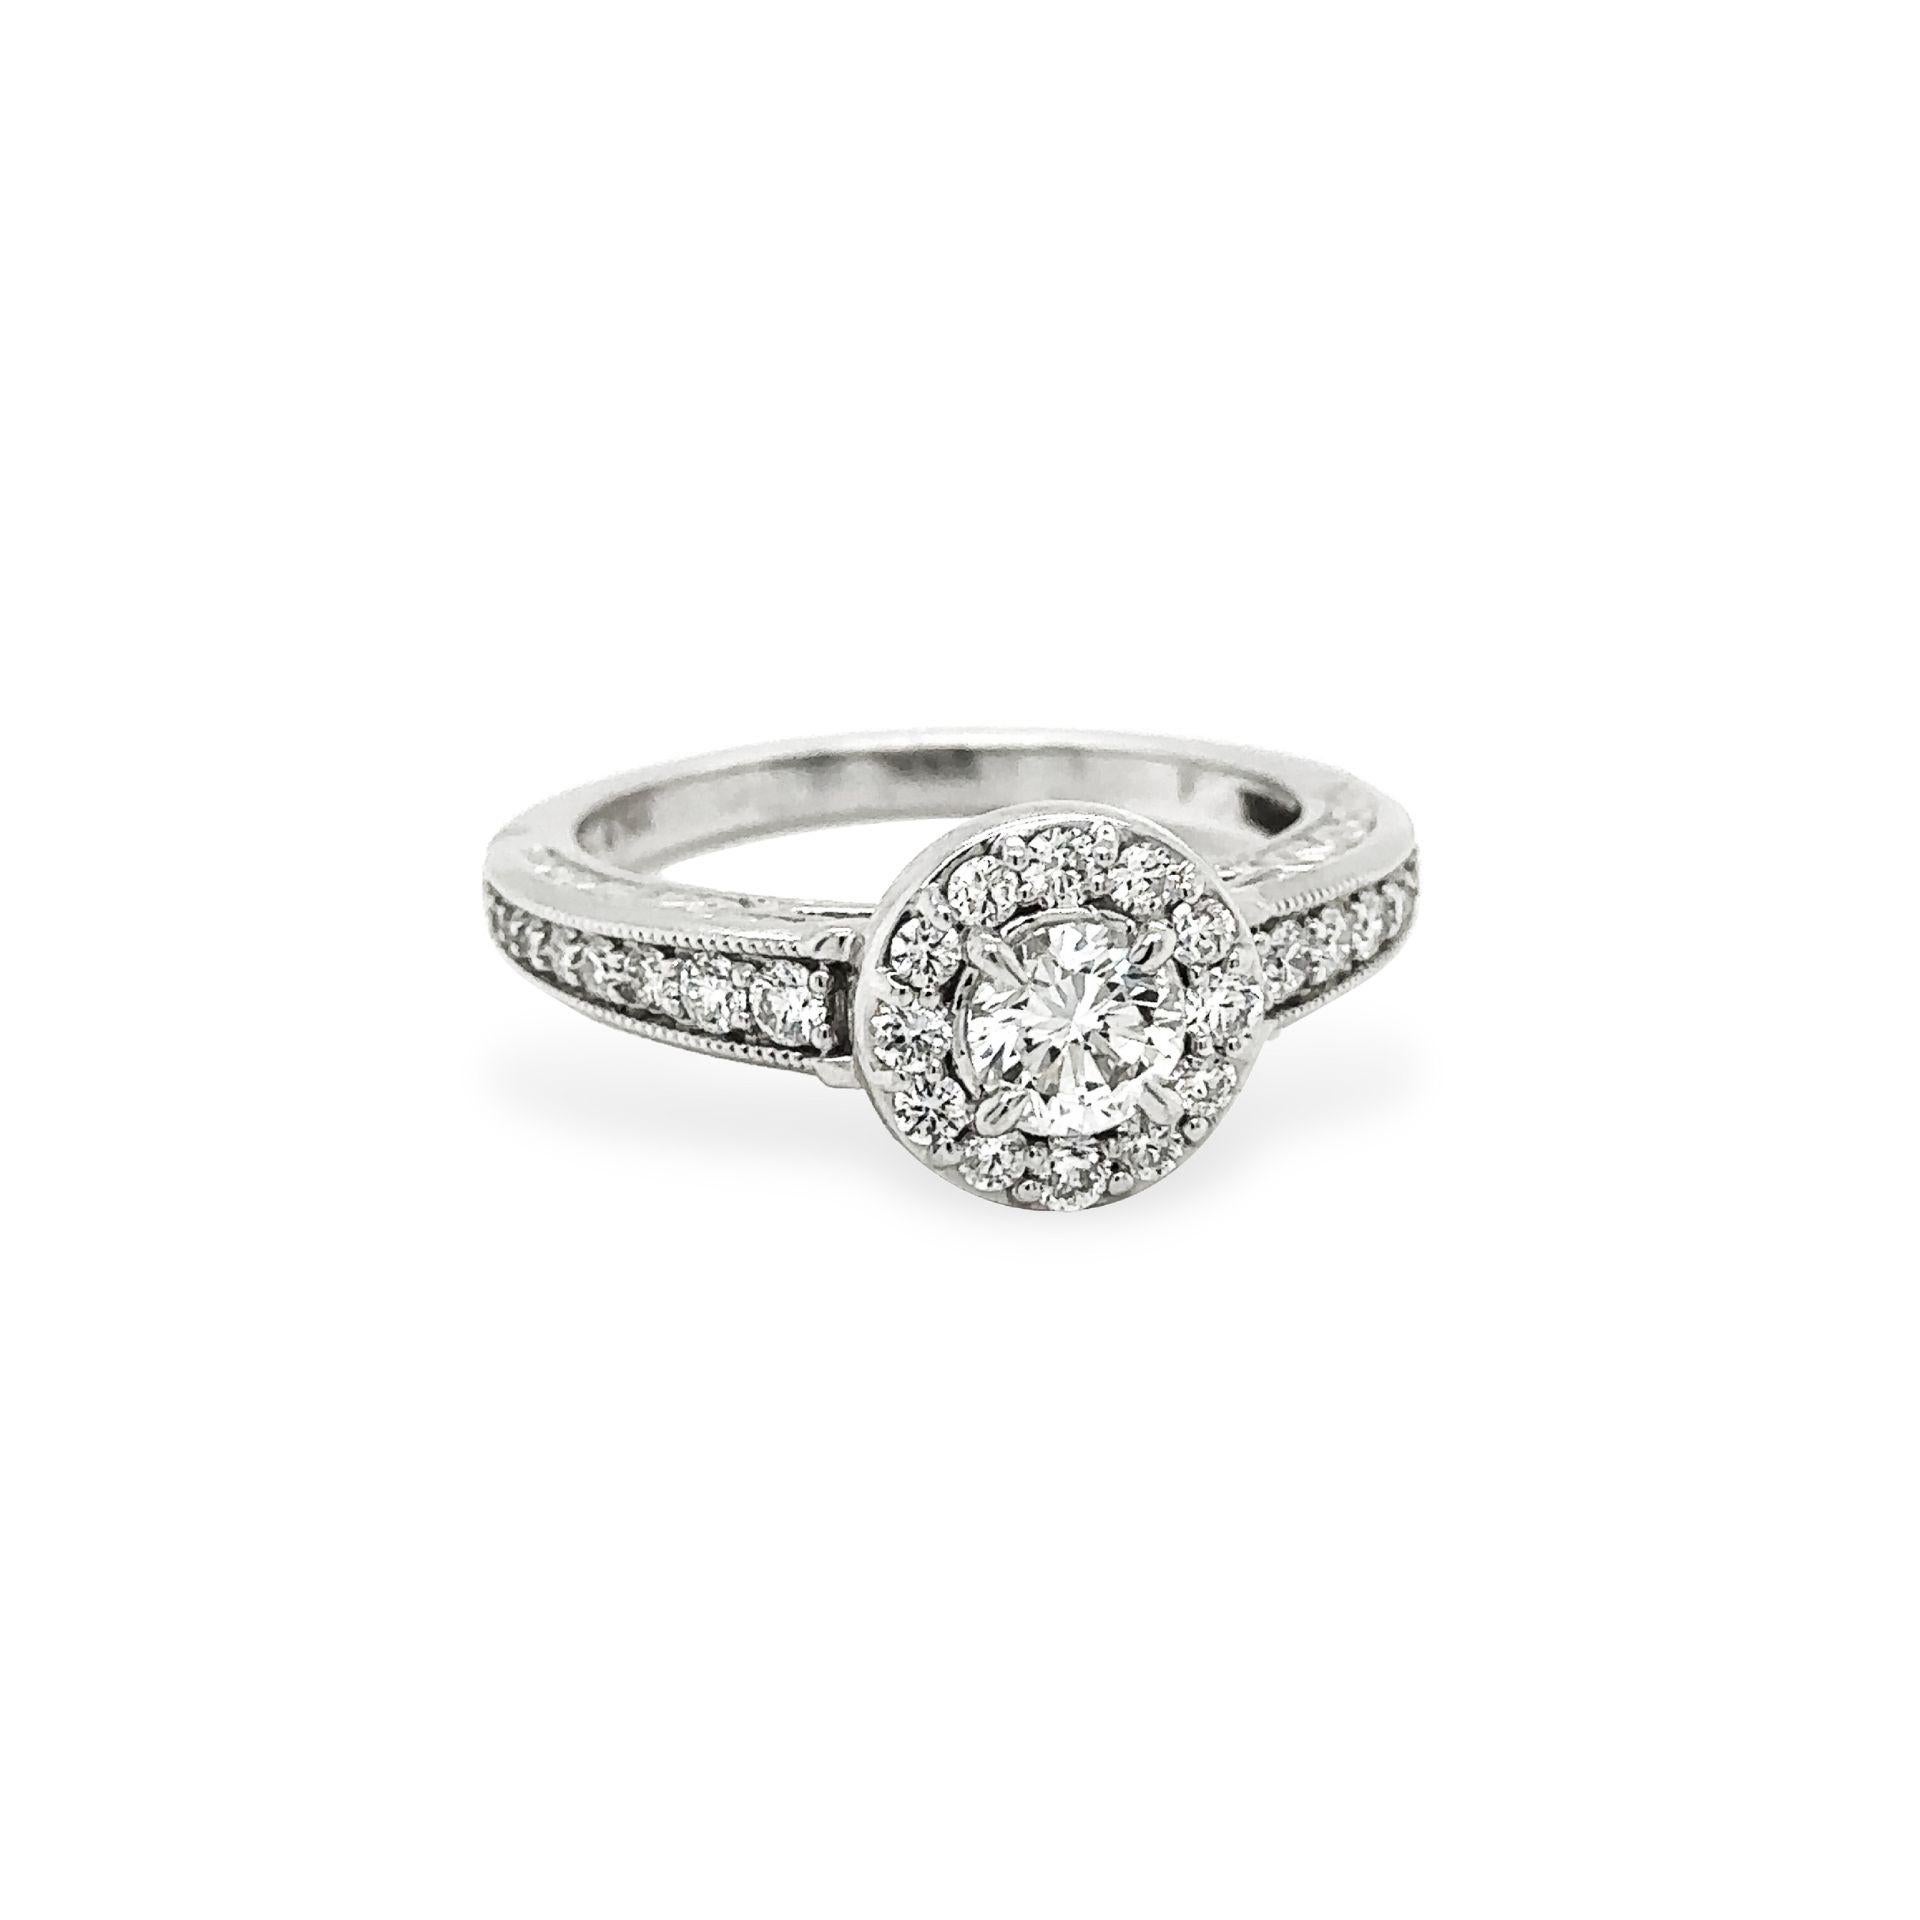 DIAMOND ENGAGEMENT RING 0.93 CARAT TOTAL WEIGHT SET IN 14KWG G VVS1 GIA

Round Diamond Center Stone 0.43 carats 
 
